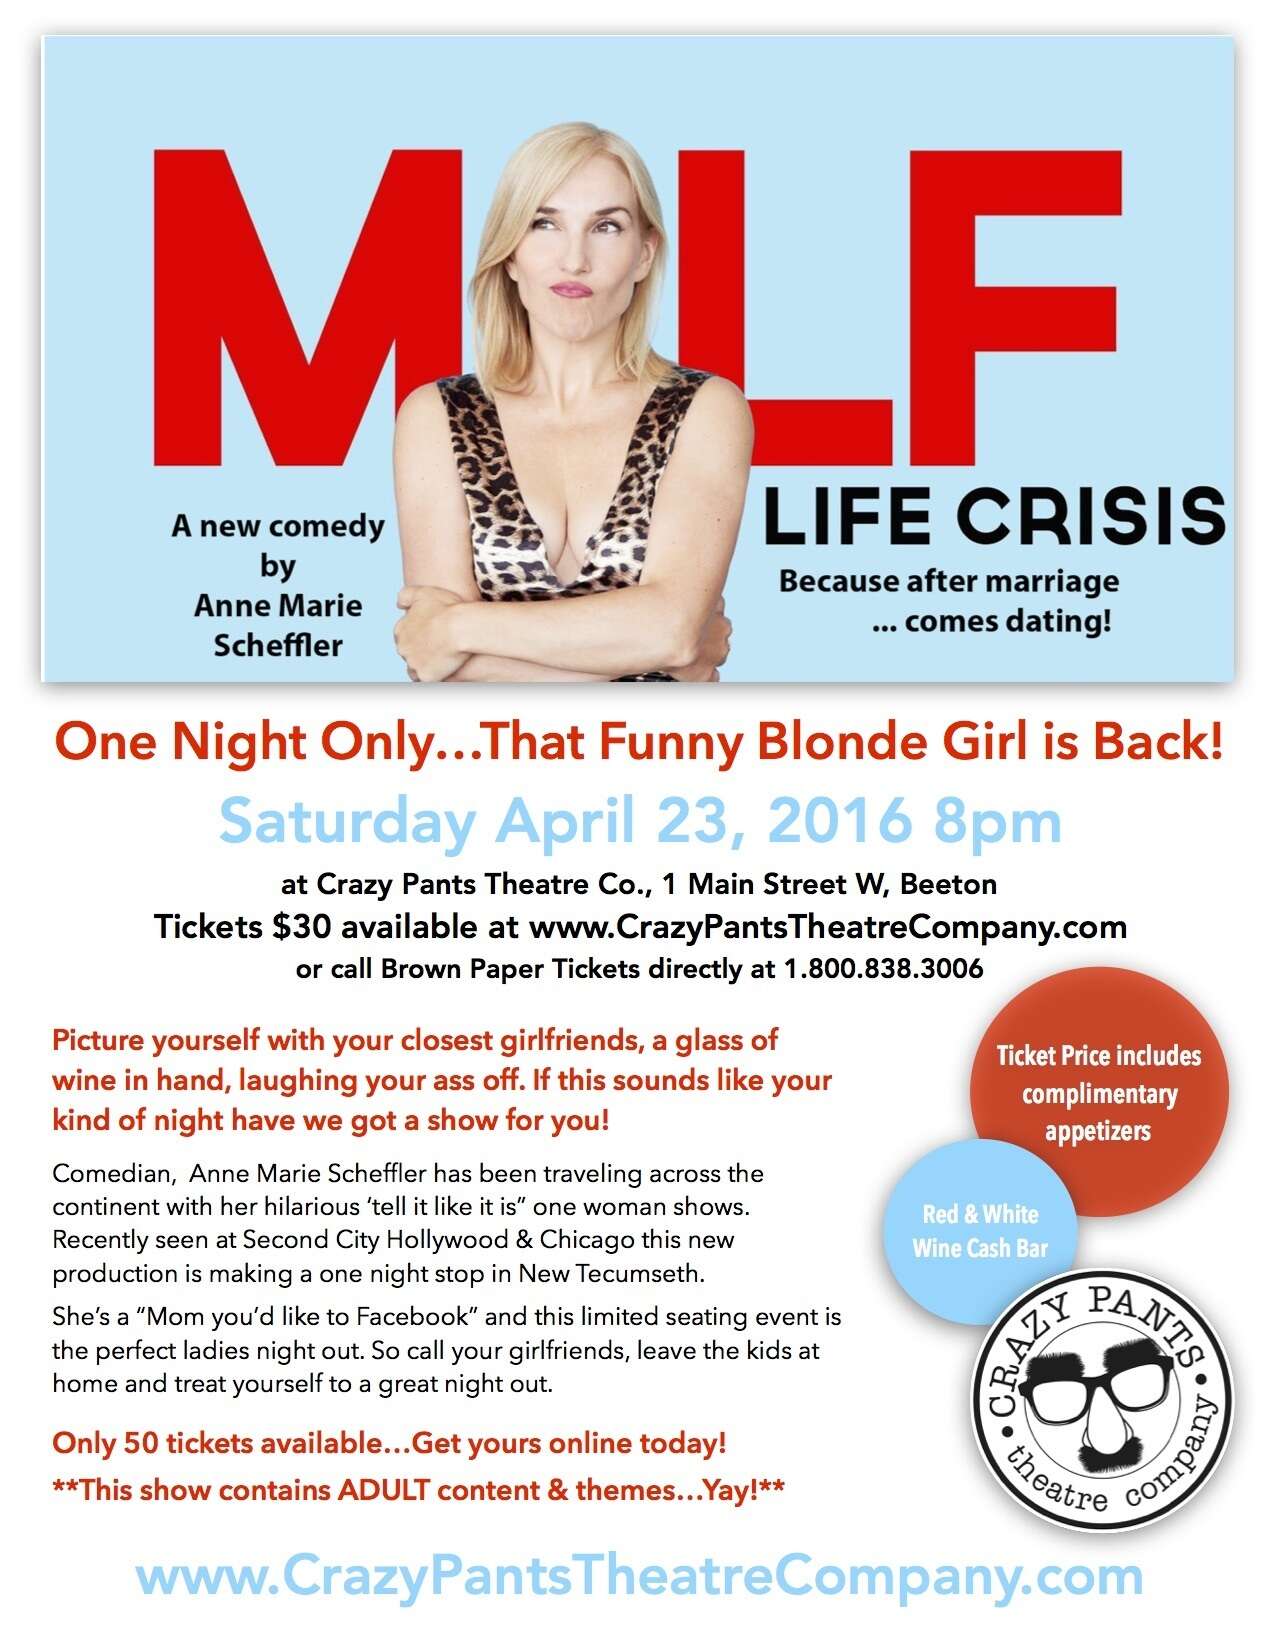 MILF Life Crisis... A New Comedy by Anne Marie Scheffler